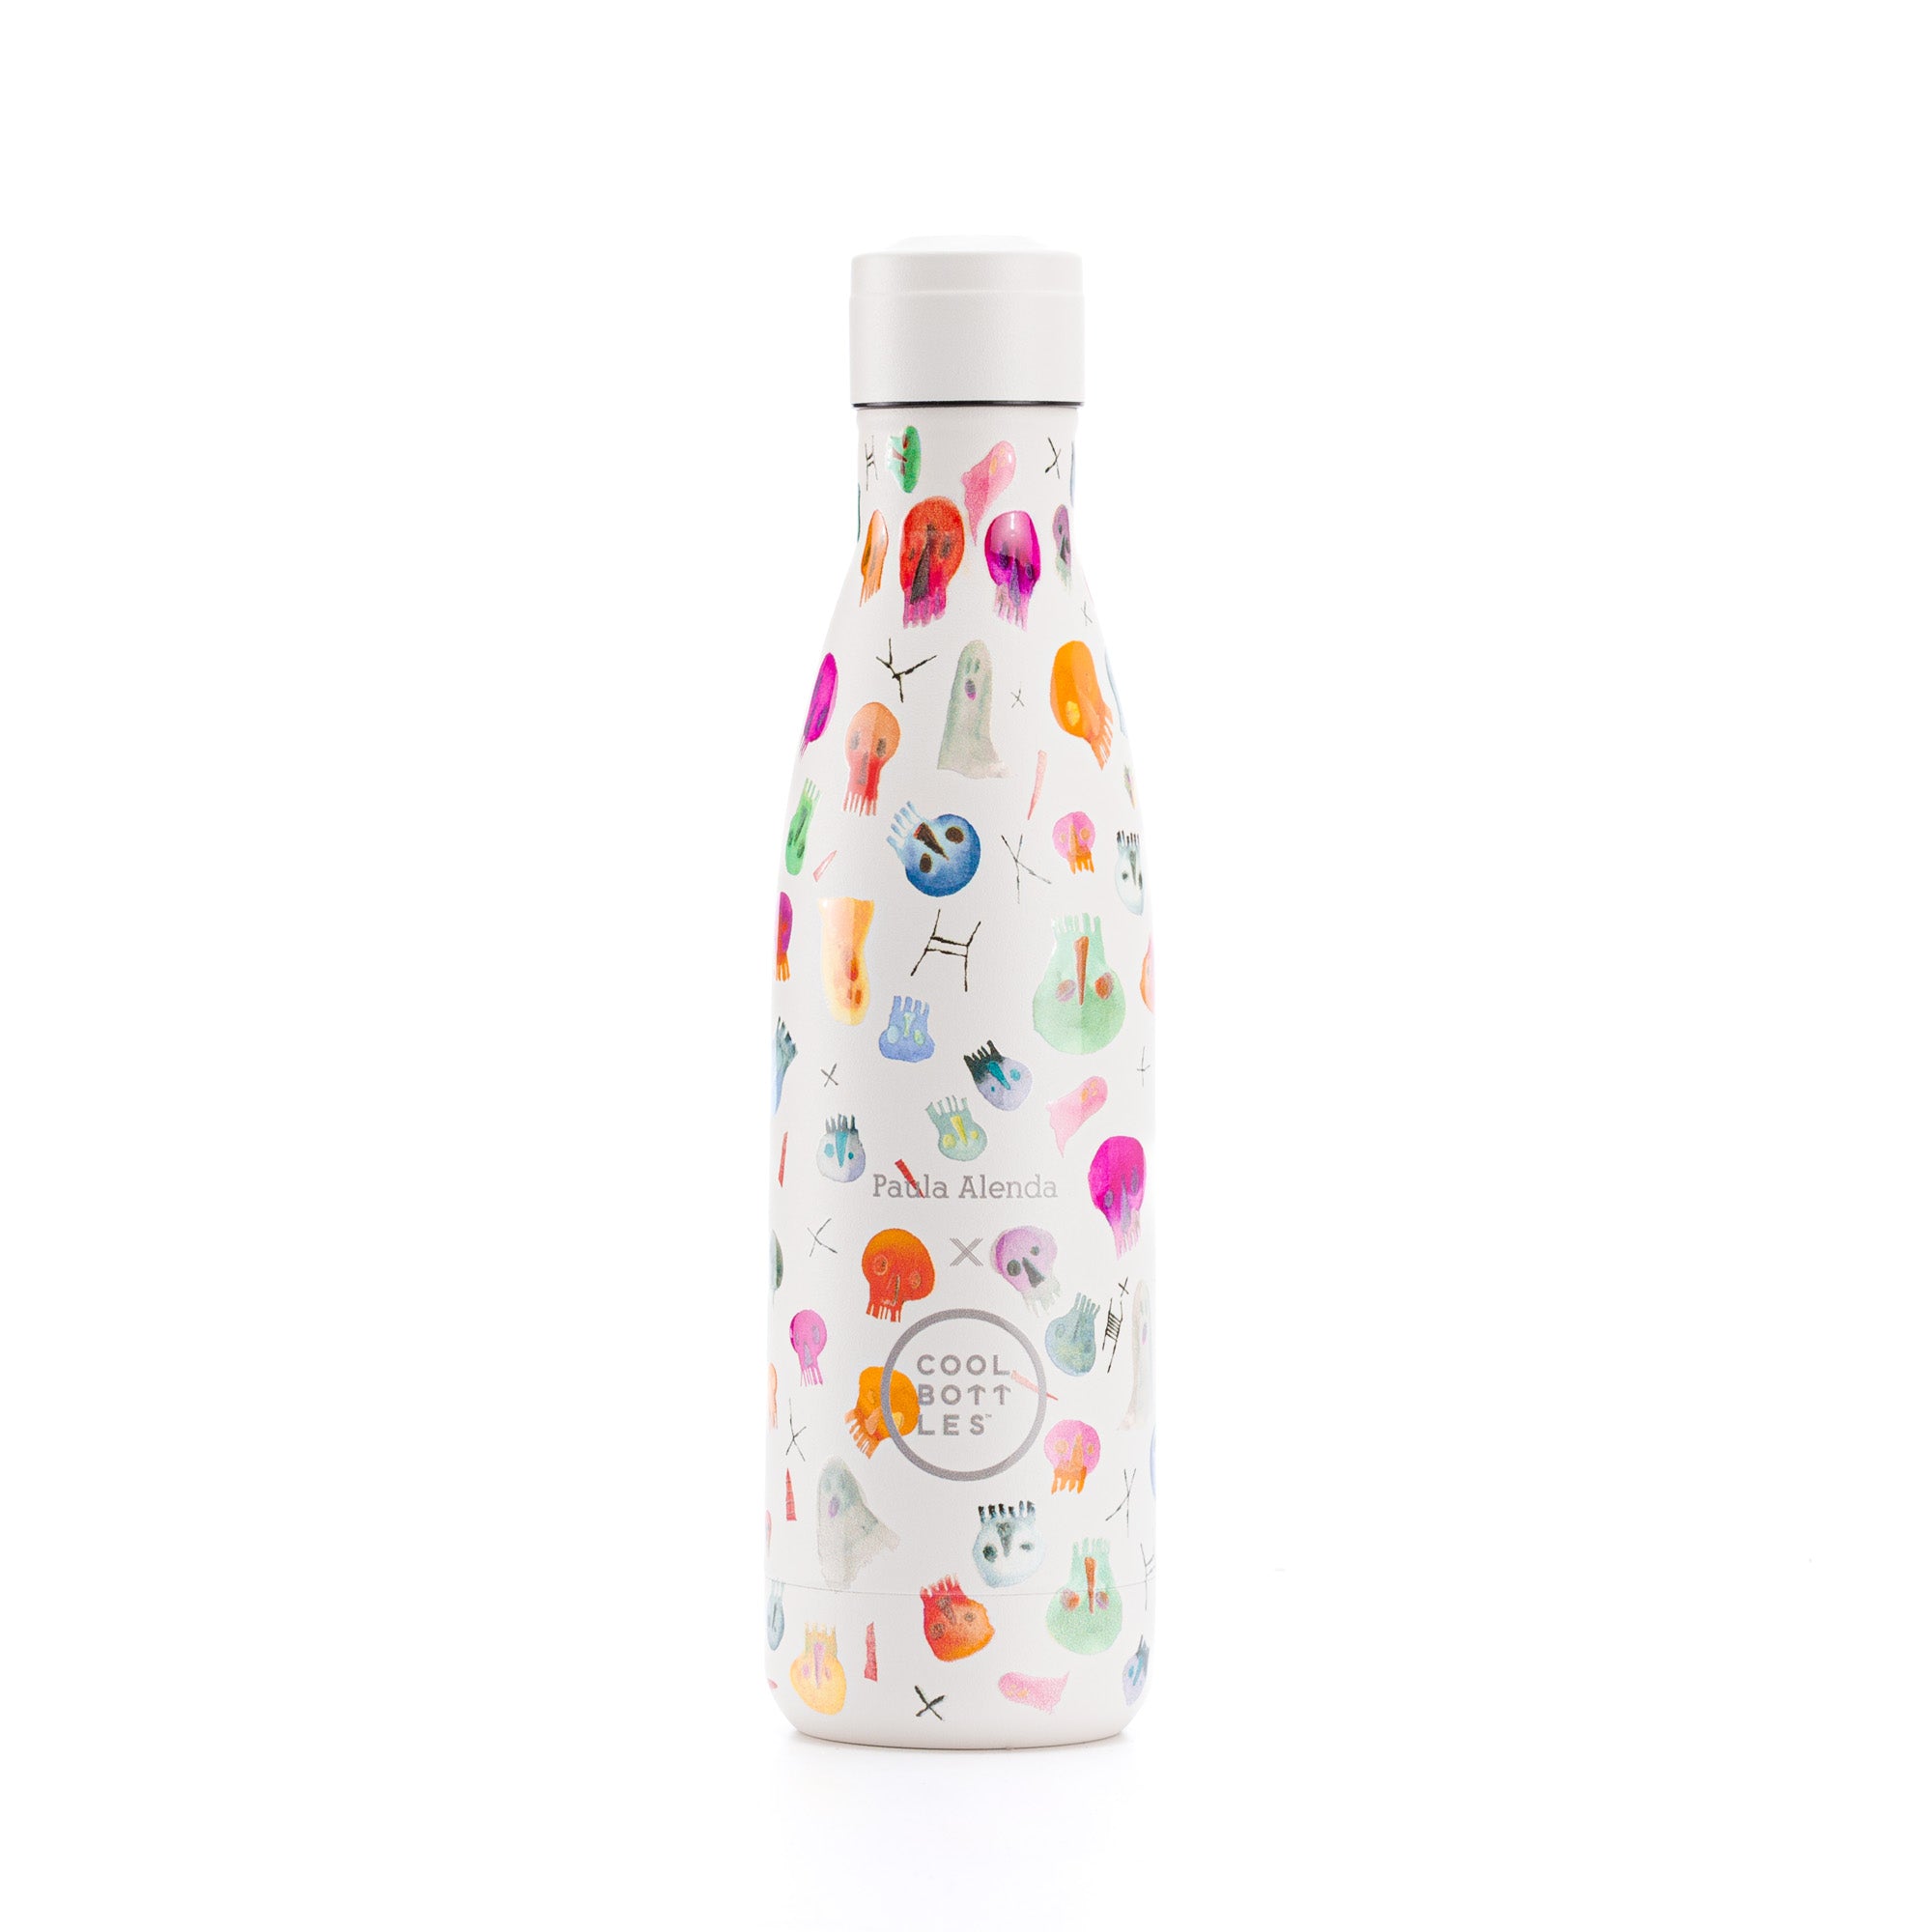 Garrafa Térmica De Aço Inoxidável Cool Bottles. Crazy Skulls 500ml - multicolor - 